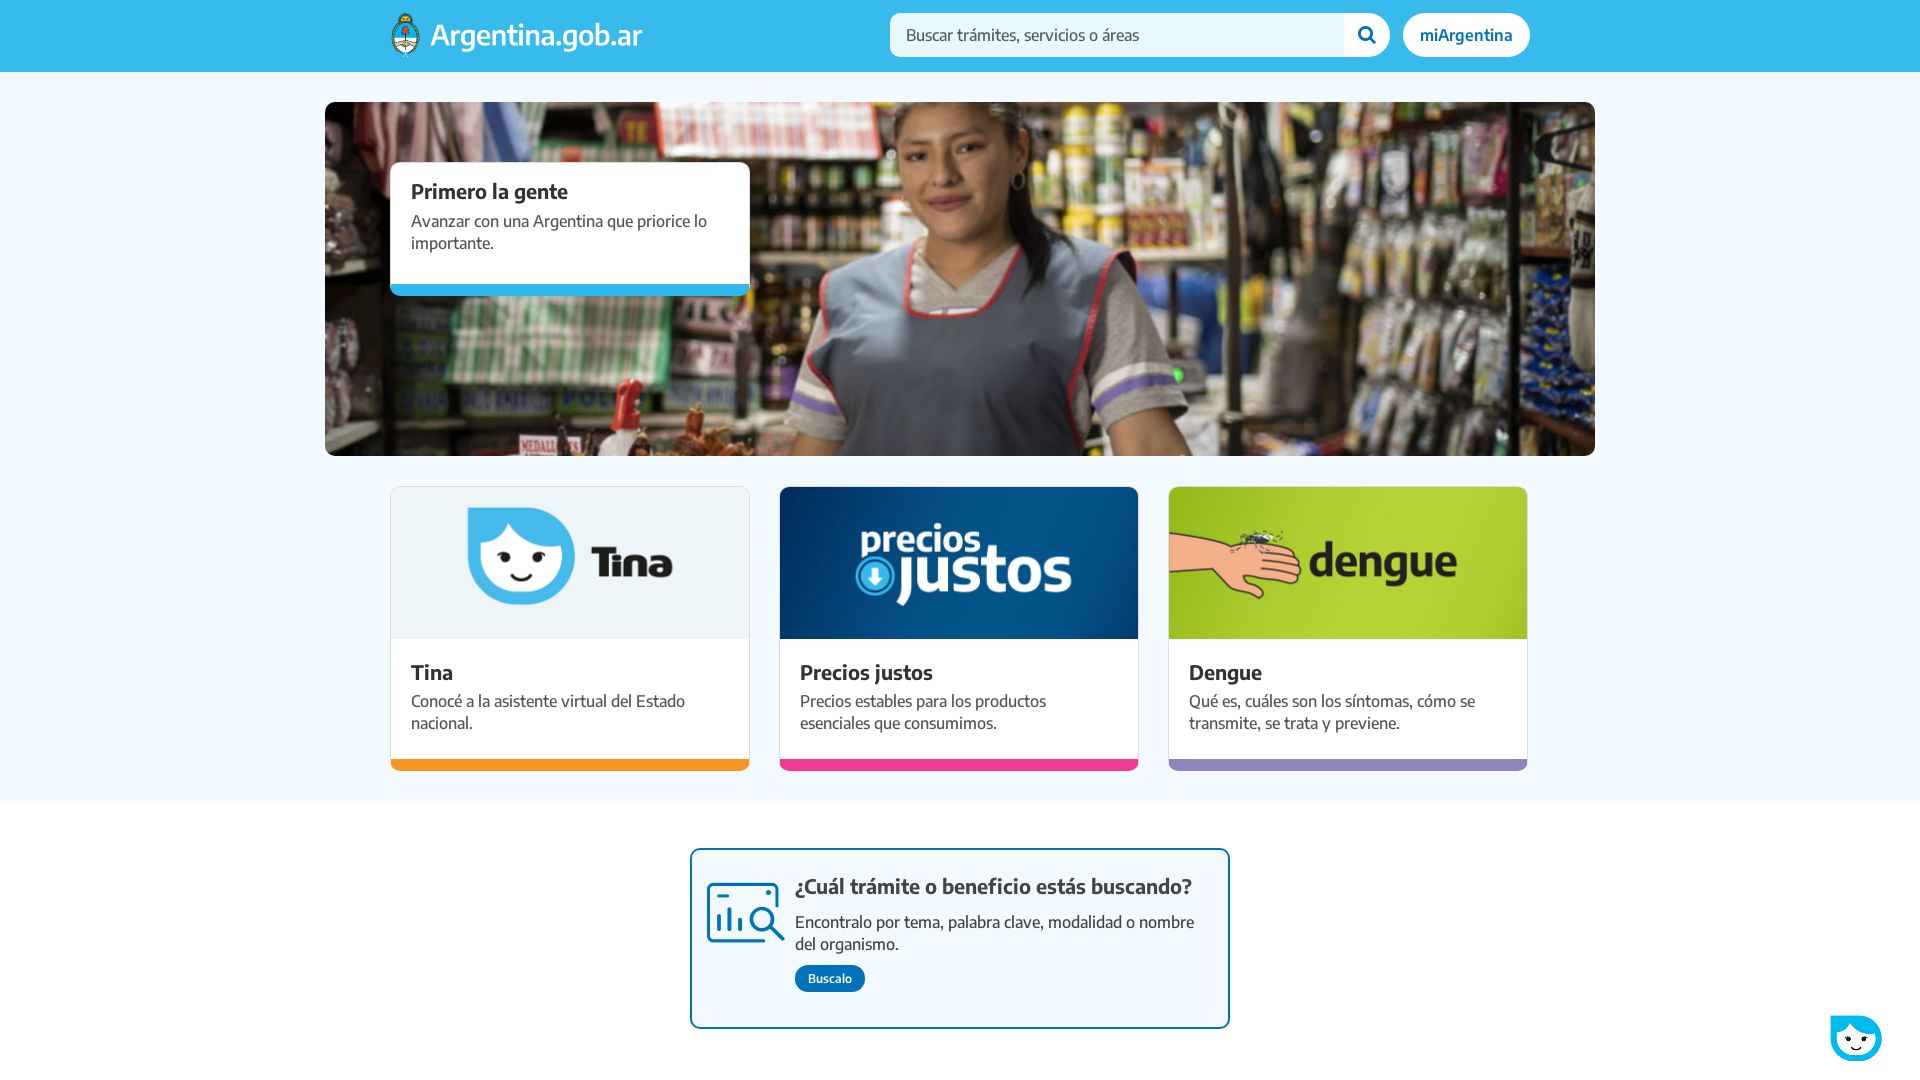 Website status www.argentina.gob.ar is   ONLINE